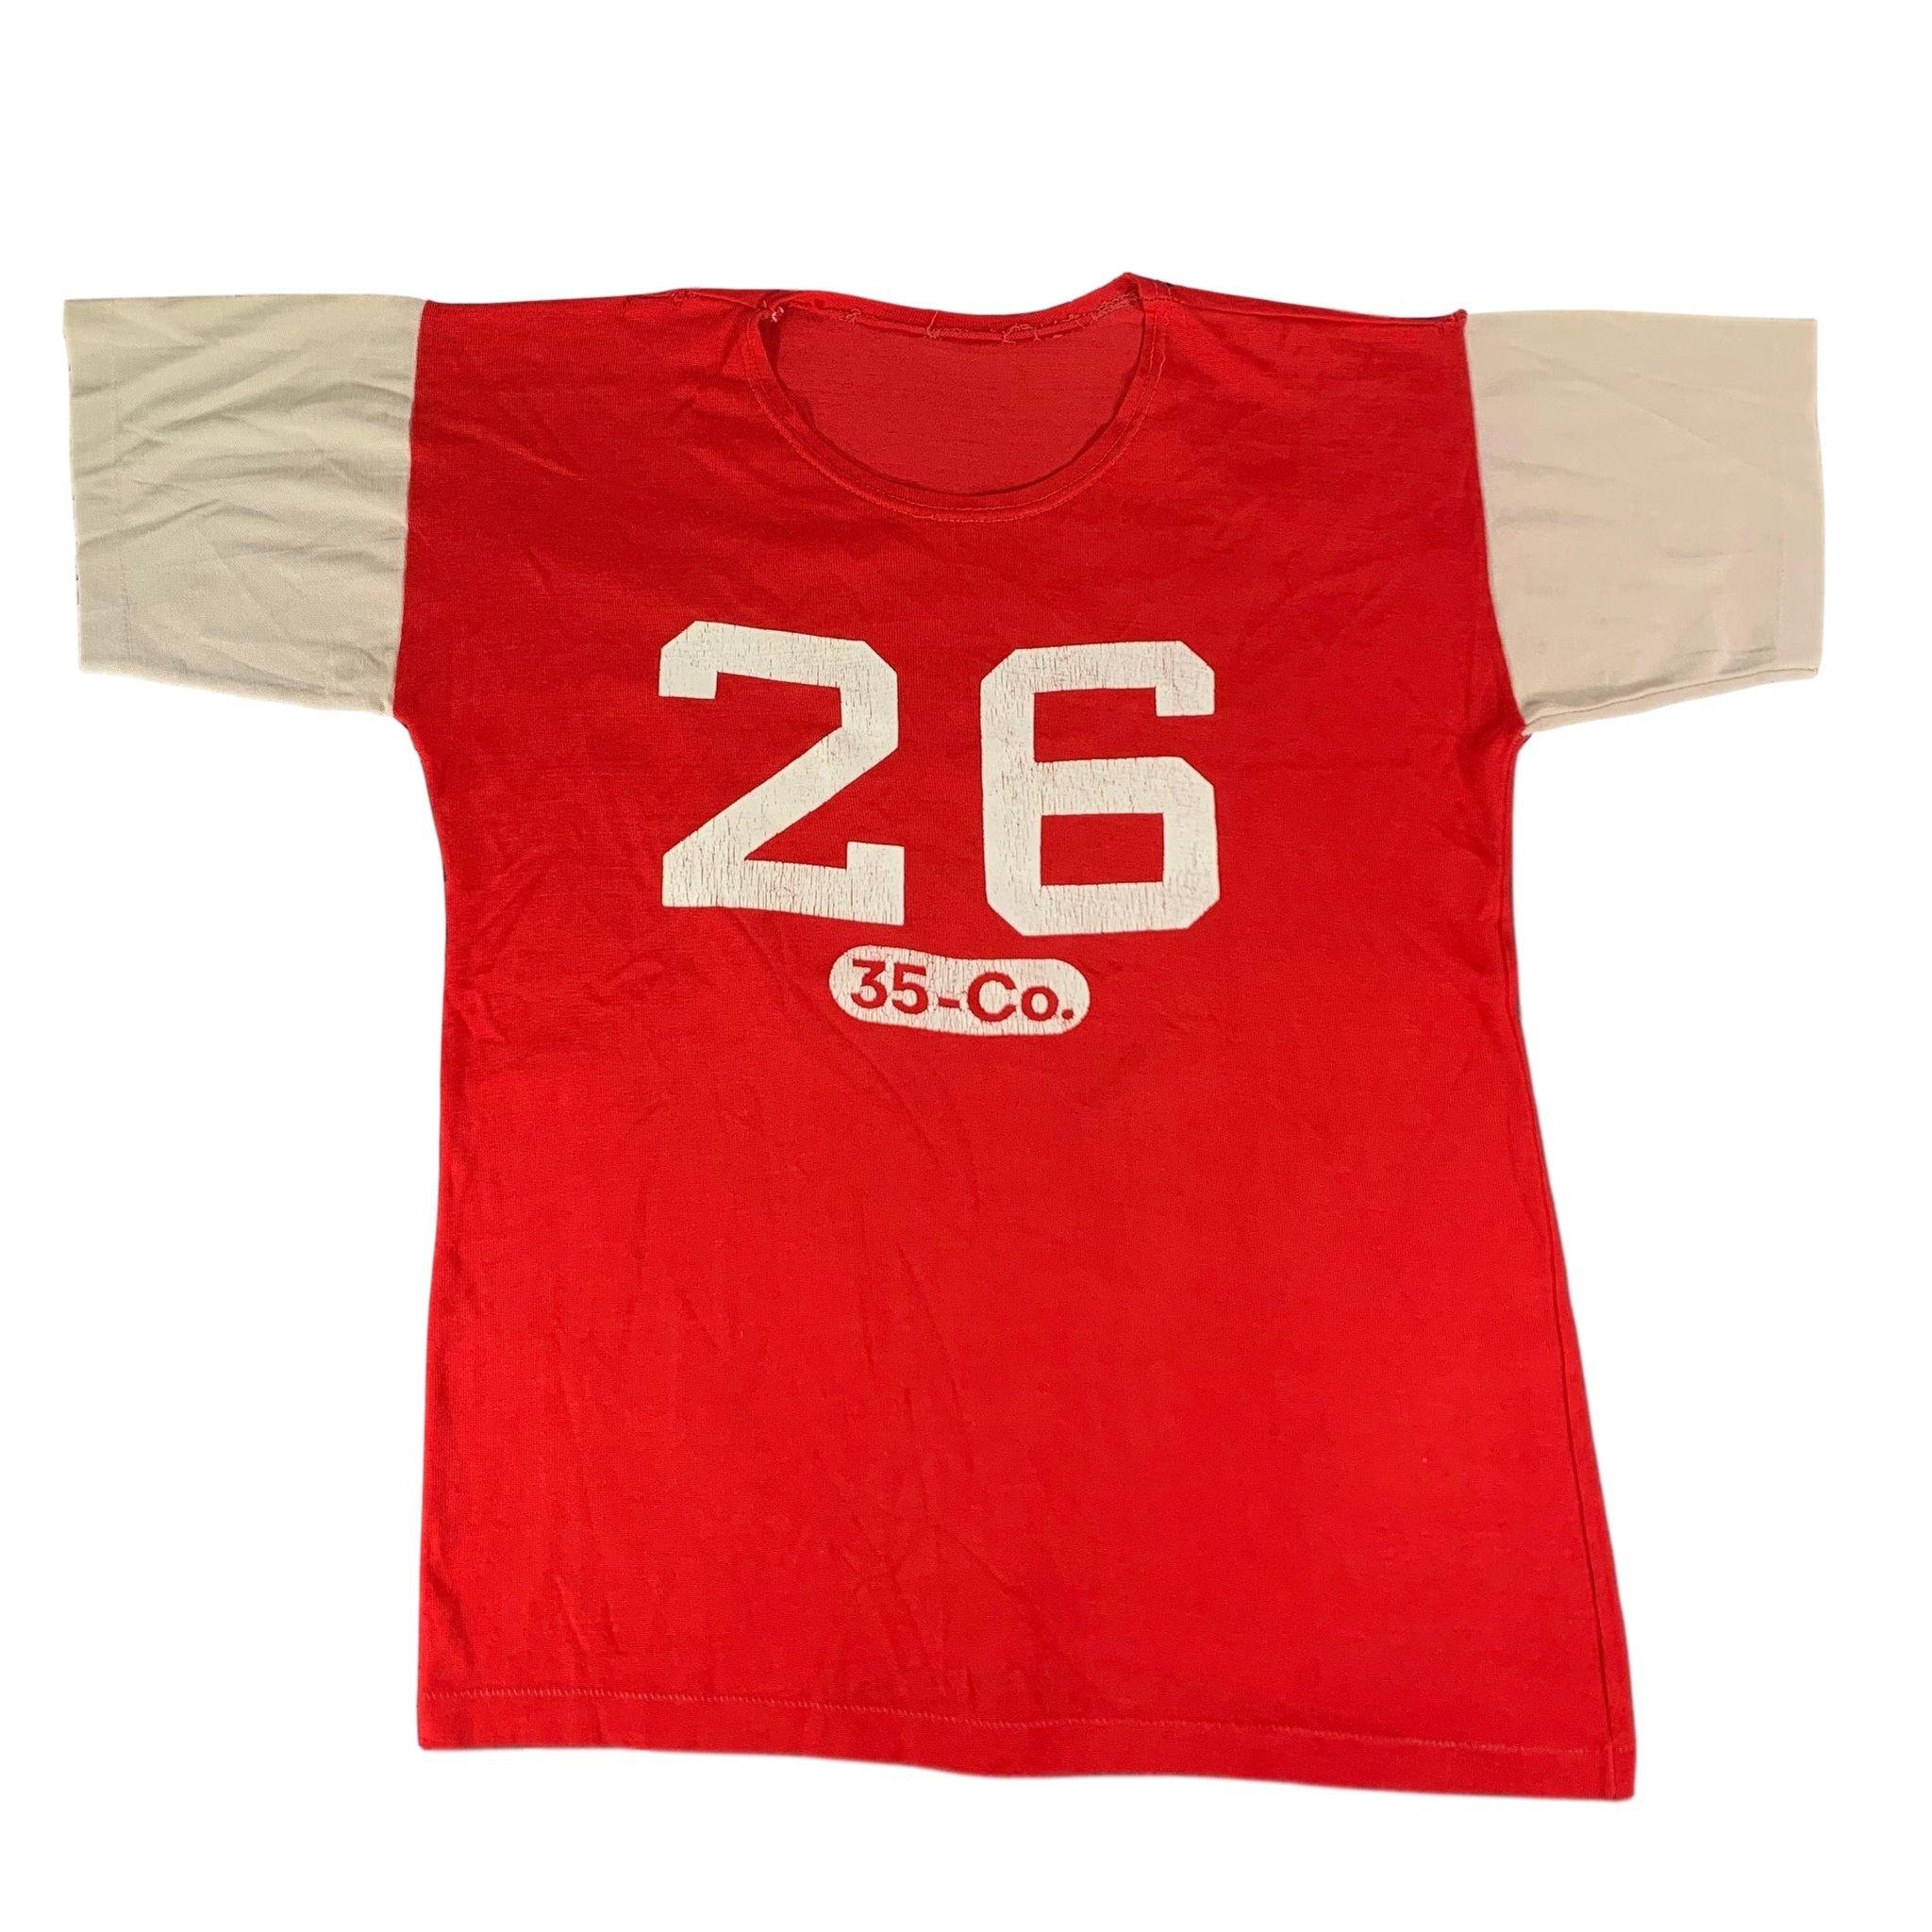 Vintage Champion Jerseys T-shirts